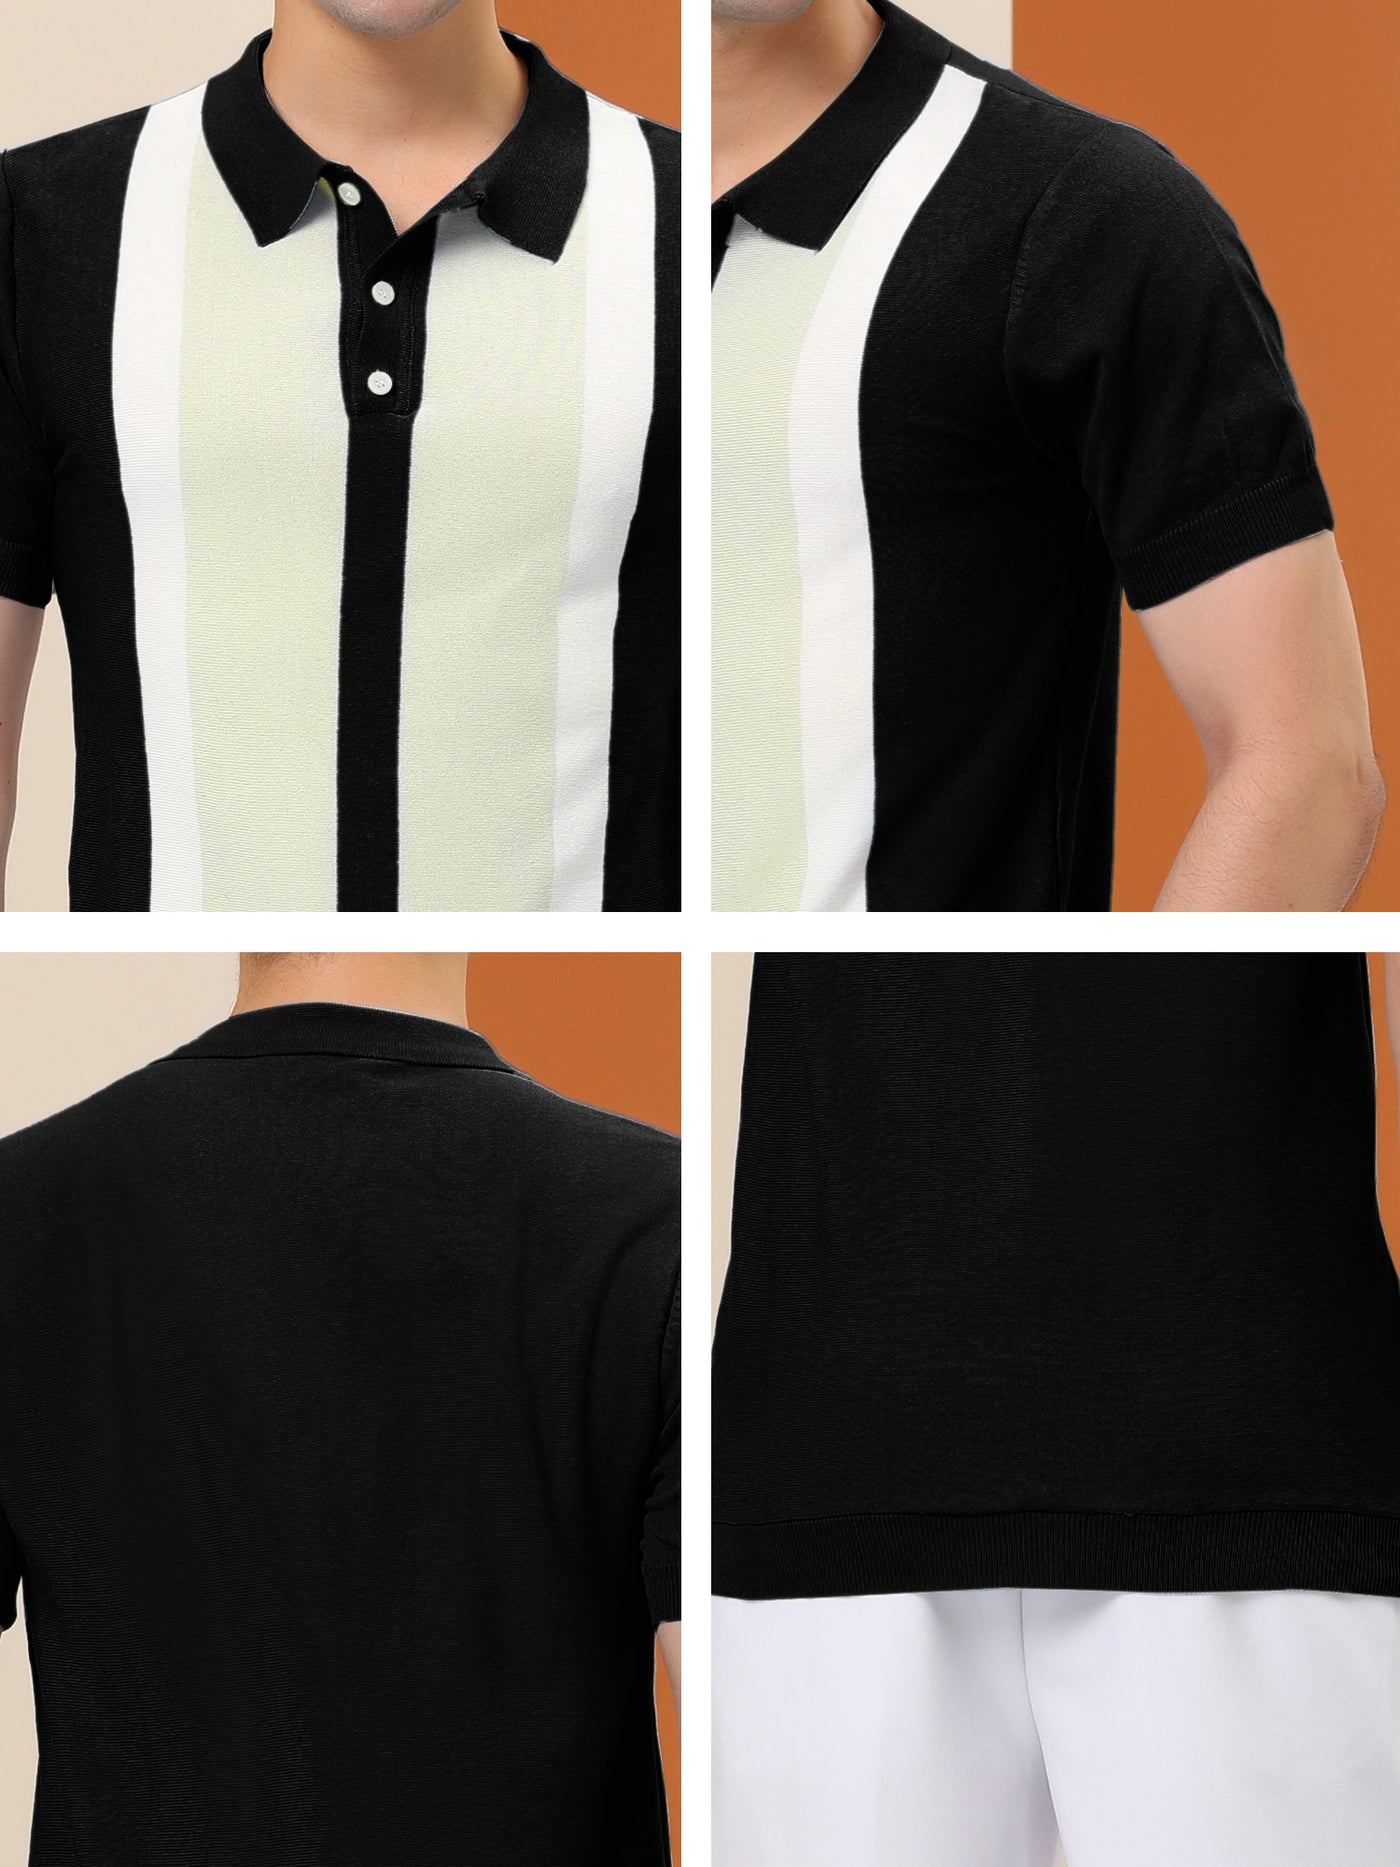 Bublédon Color Block Cotton Short Sleeve Golf Polo T-shirts